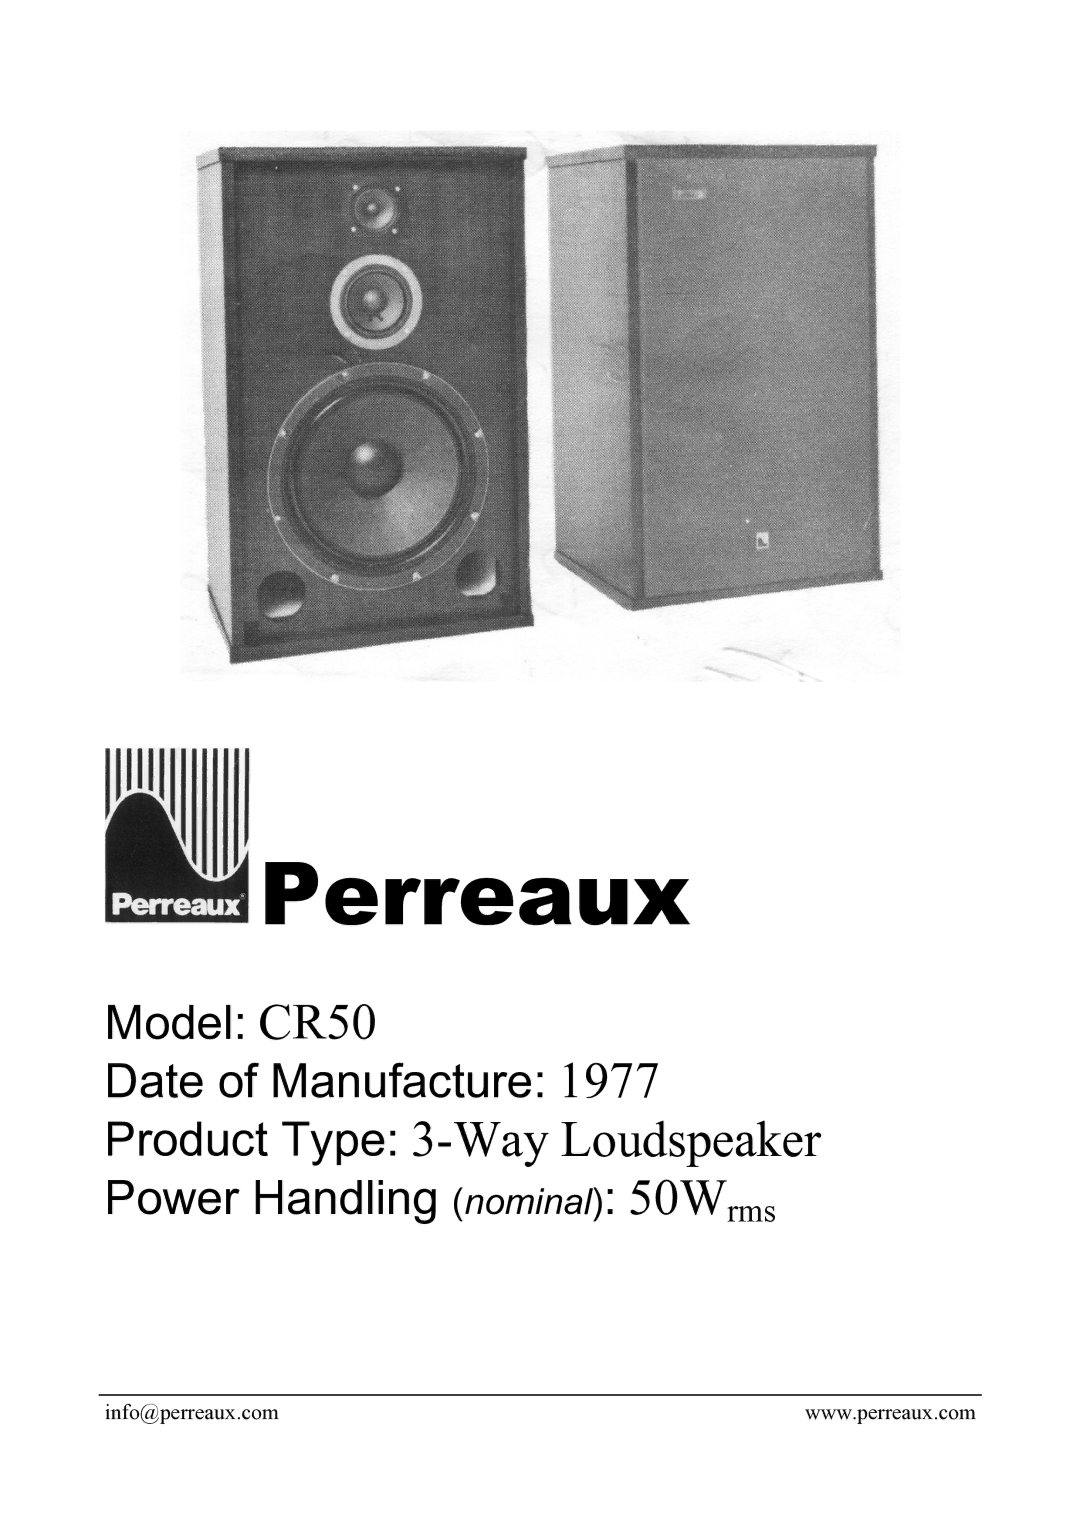 Perreaux manual Perreaux, Product Type 3-Way Loudspeaker, Model CR50 Date of Manufacture, Power Handling nominal 50Wrms 